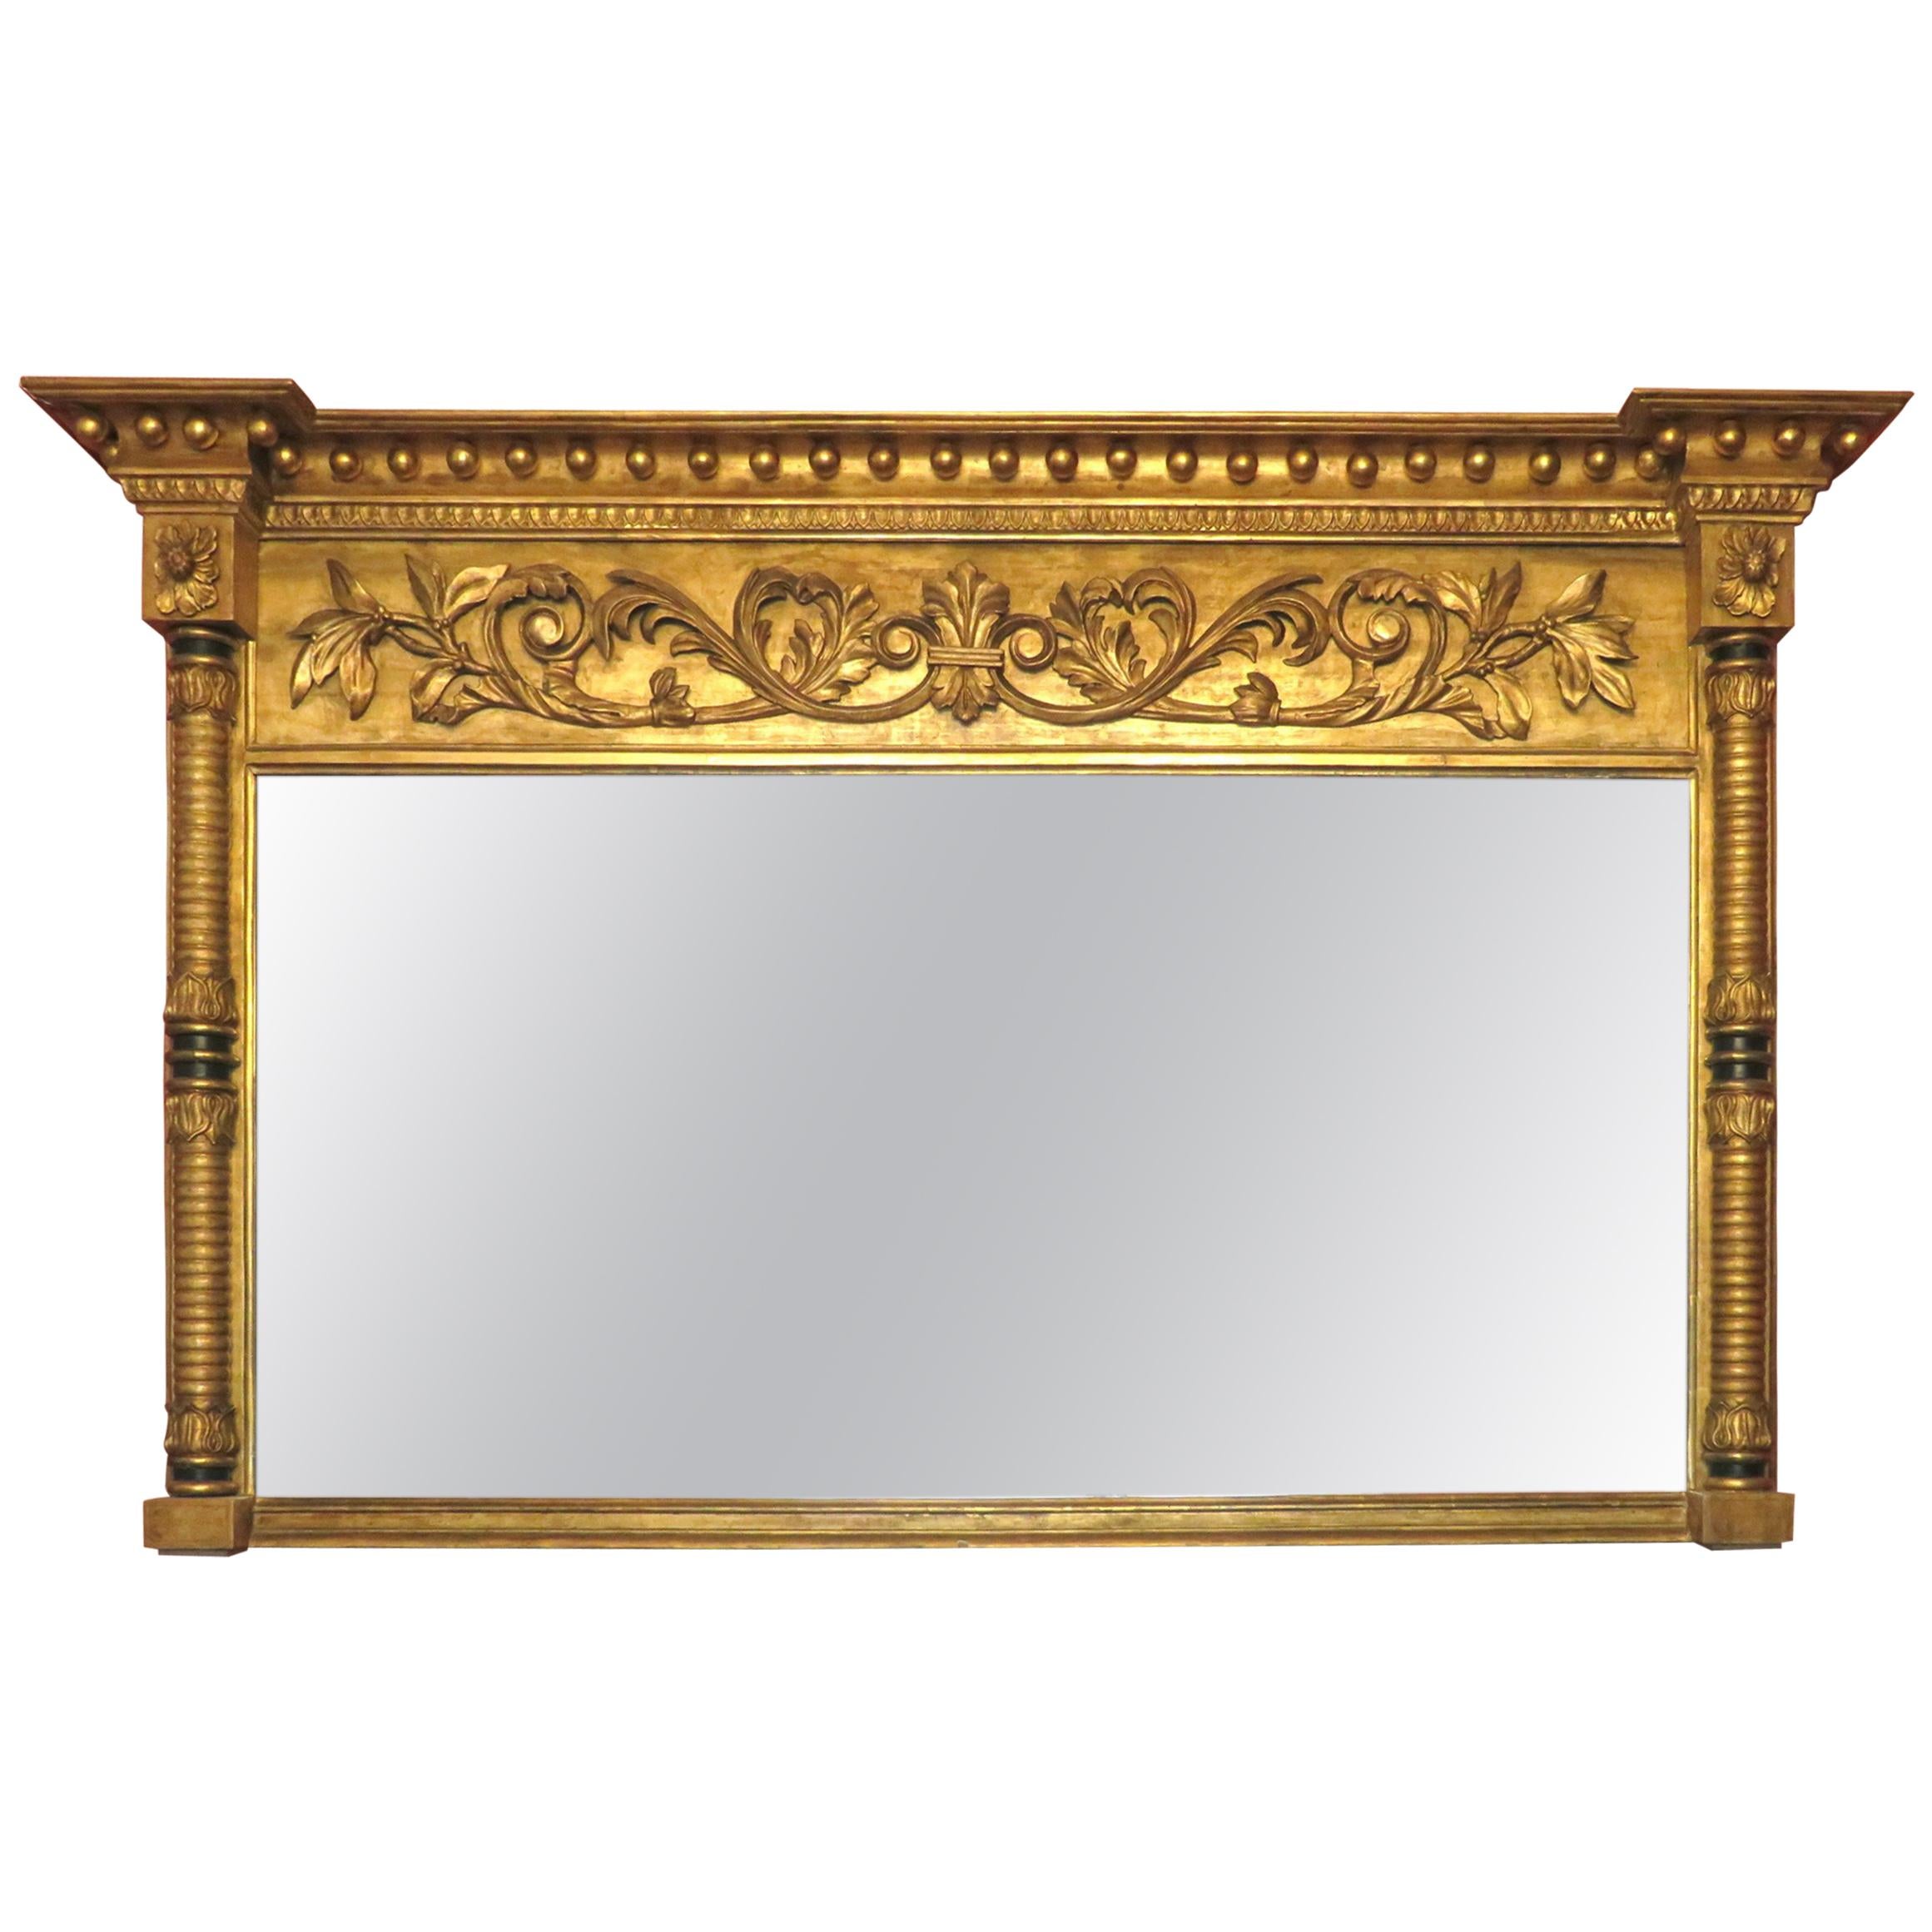 Very Fine Regency Period Giltwood Over-Mantel Mirror, England Circa 1825